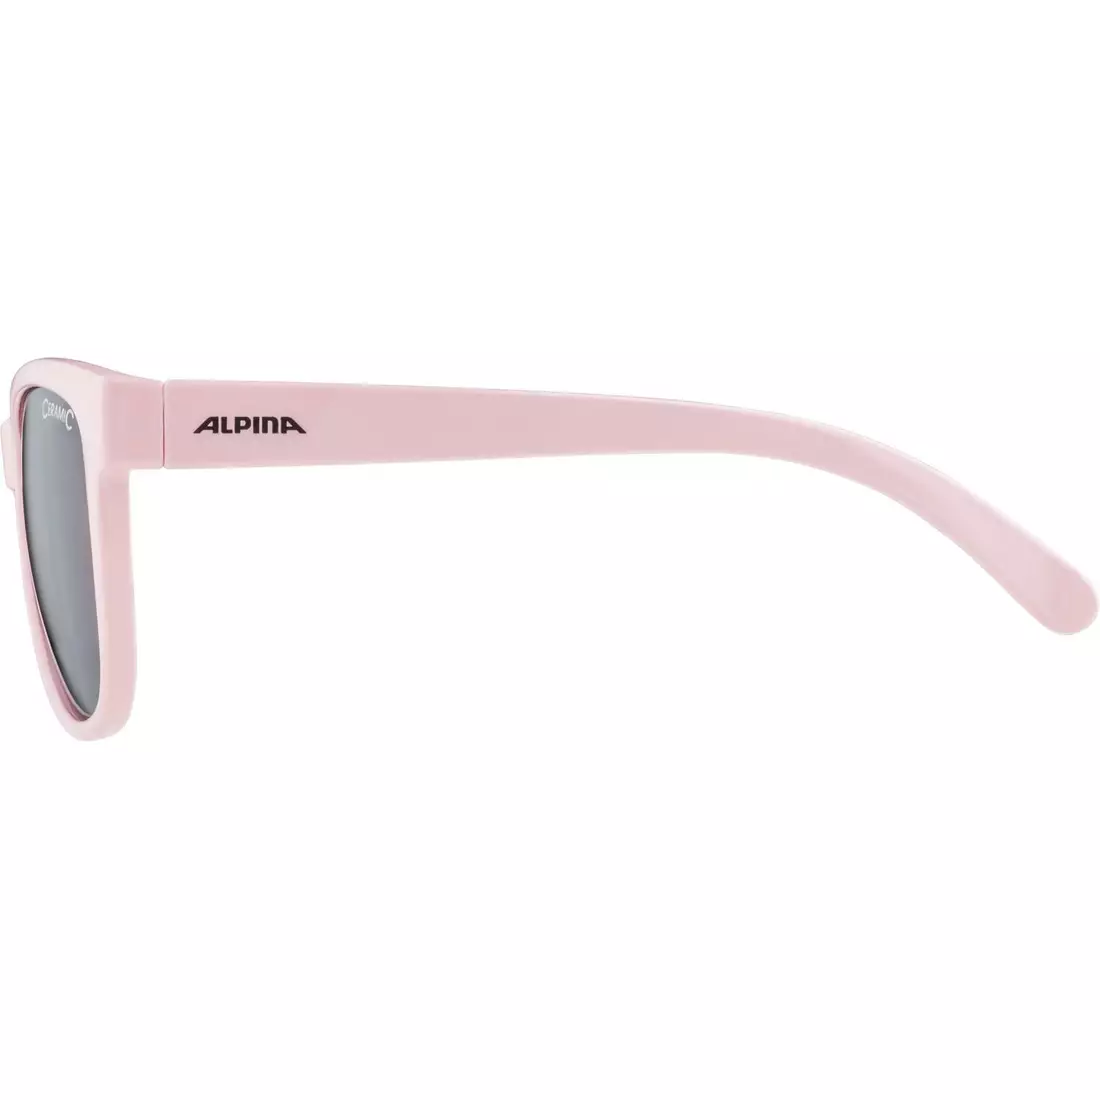 ALPINA JUNIOR LUZY Fahrrad-/Sportbrille, rose gloss